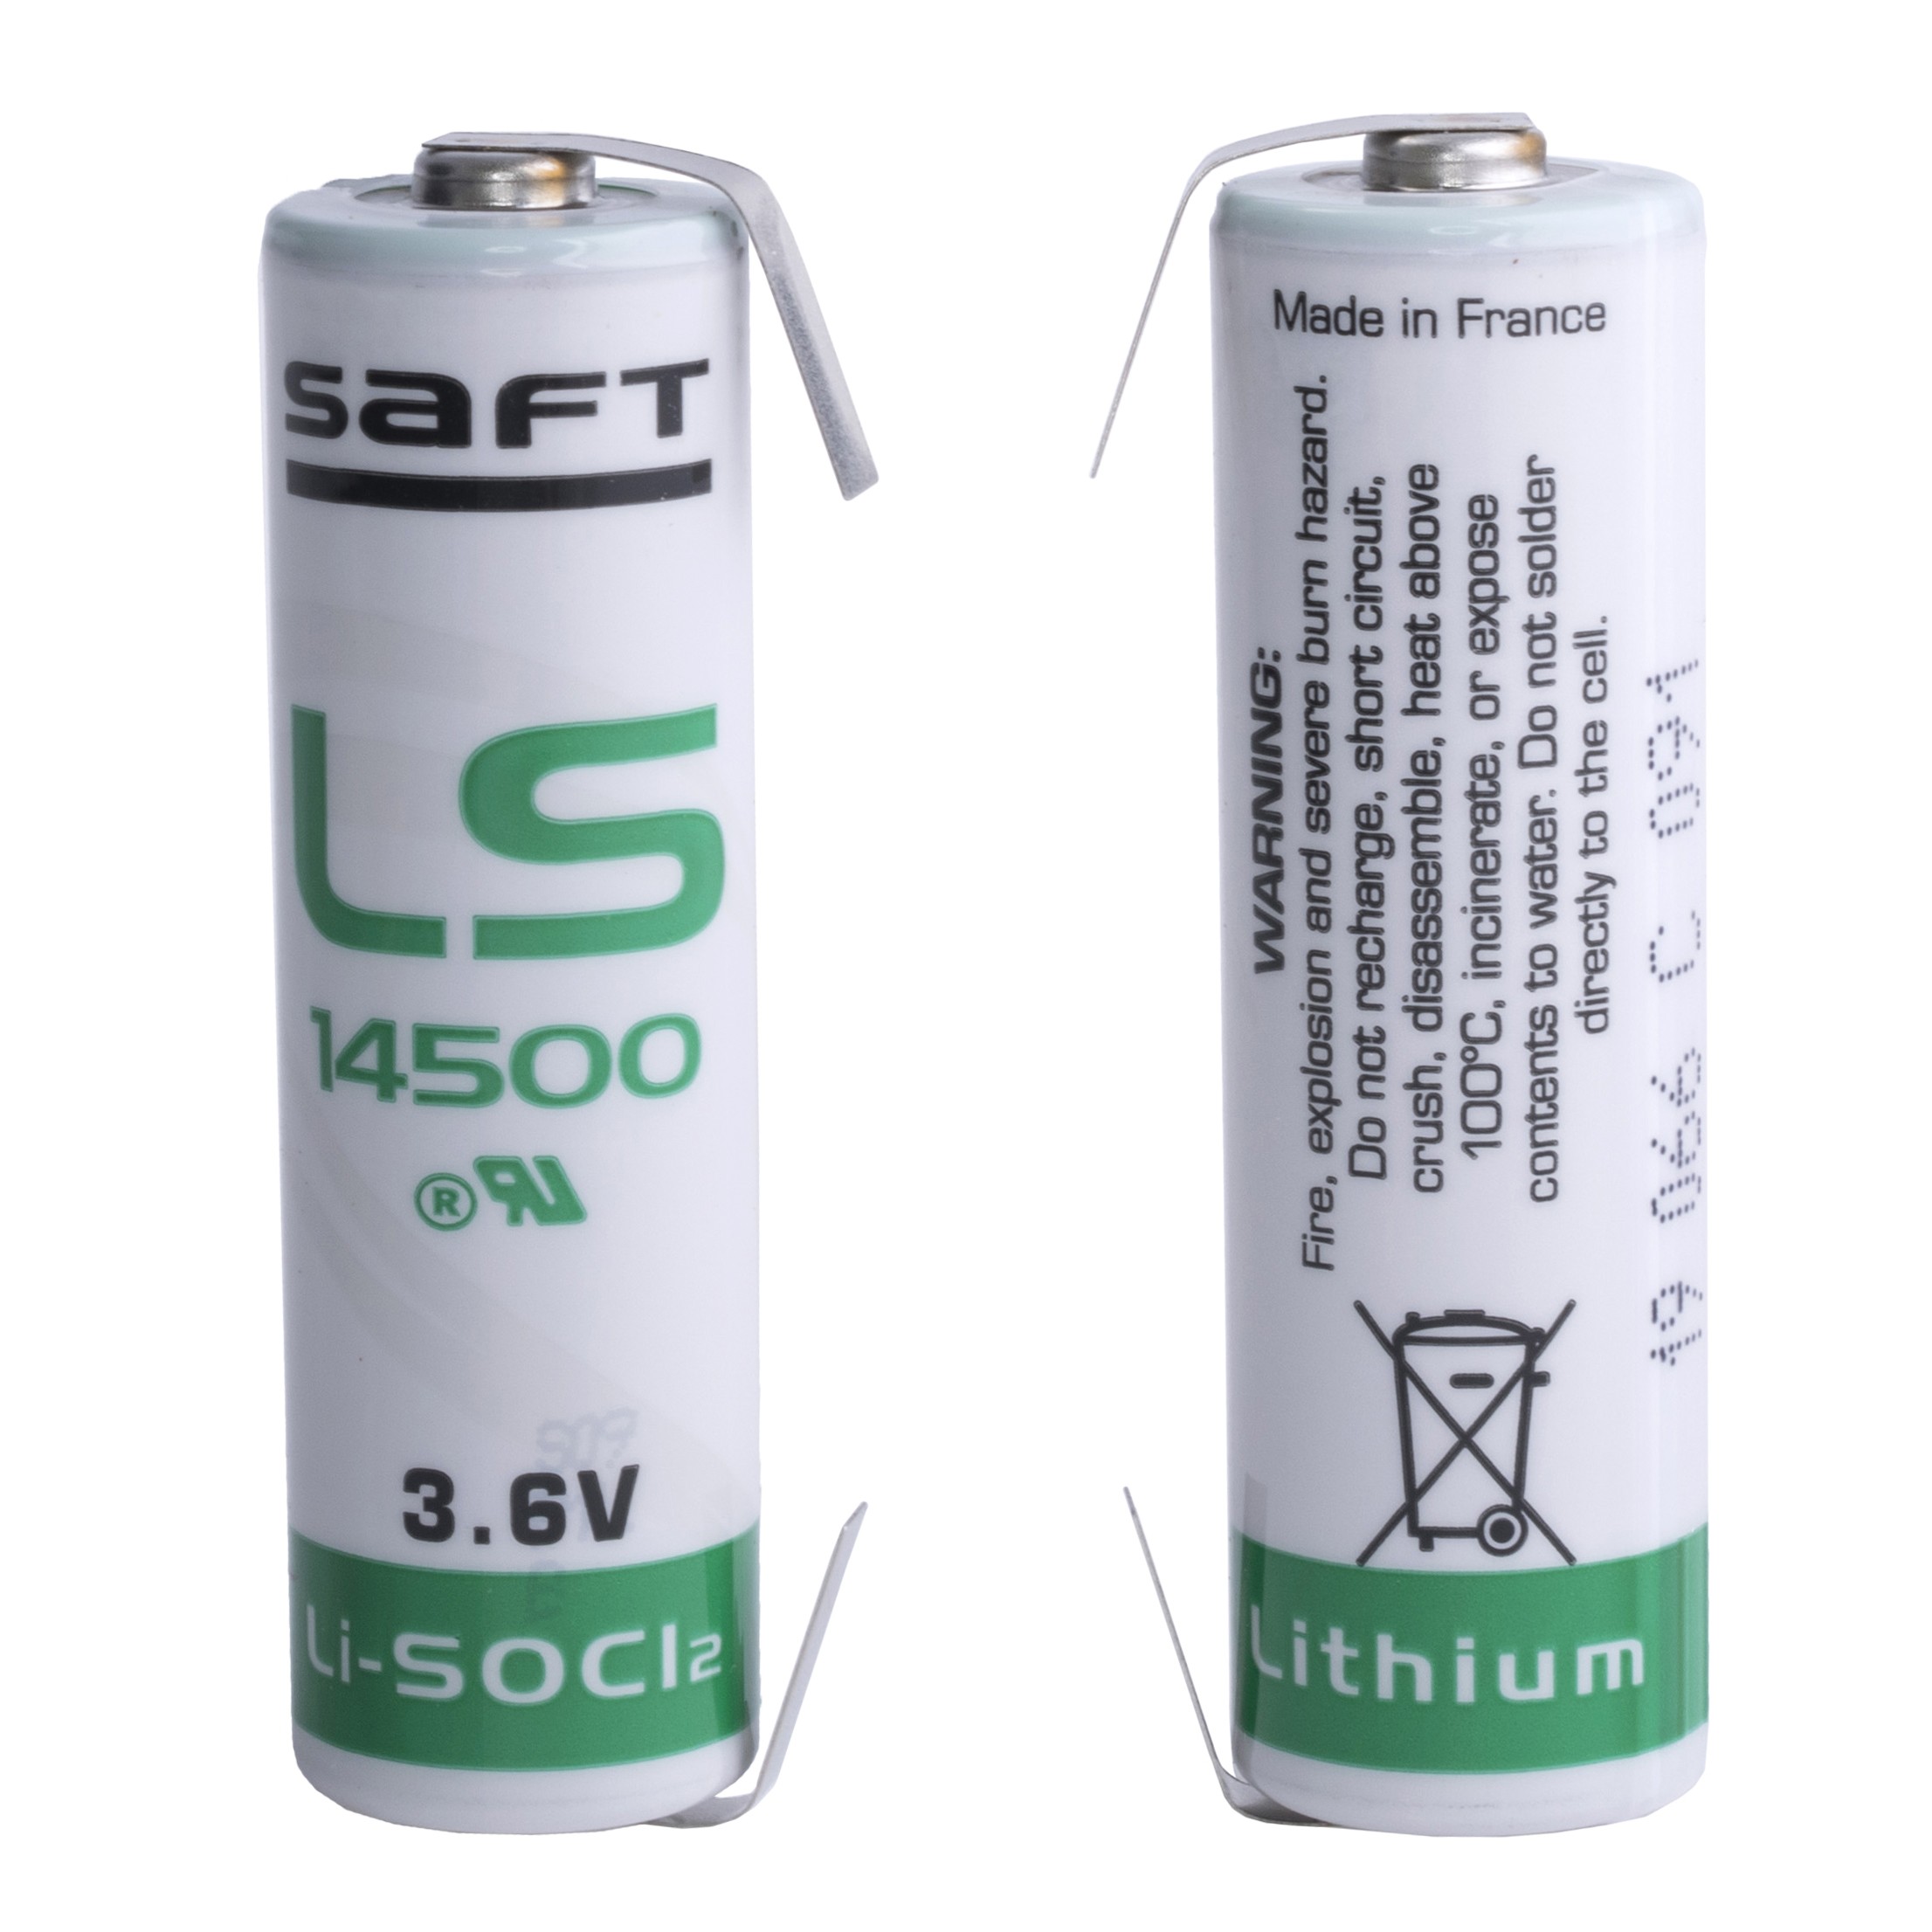 SAFT Lithium Batterie AA LS 14500 CNR mit Lotfahnen U-Formig 3,6V 2,6Ah  Lithium-Thionylchlorid 43654 ab 4.81 EUR - Radiomag GmbH